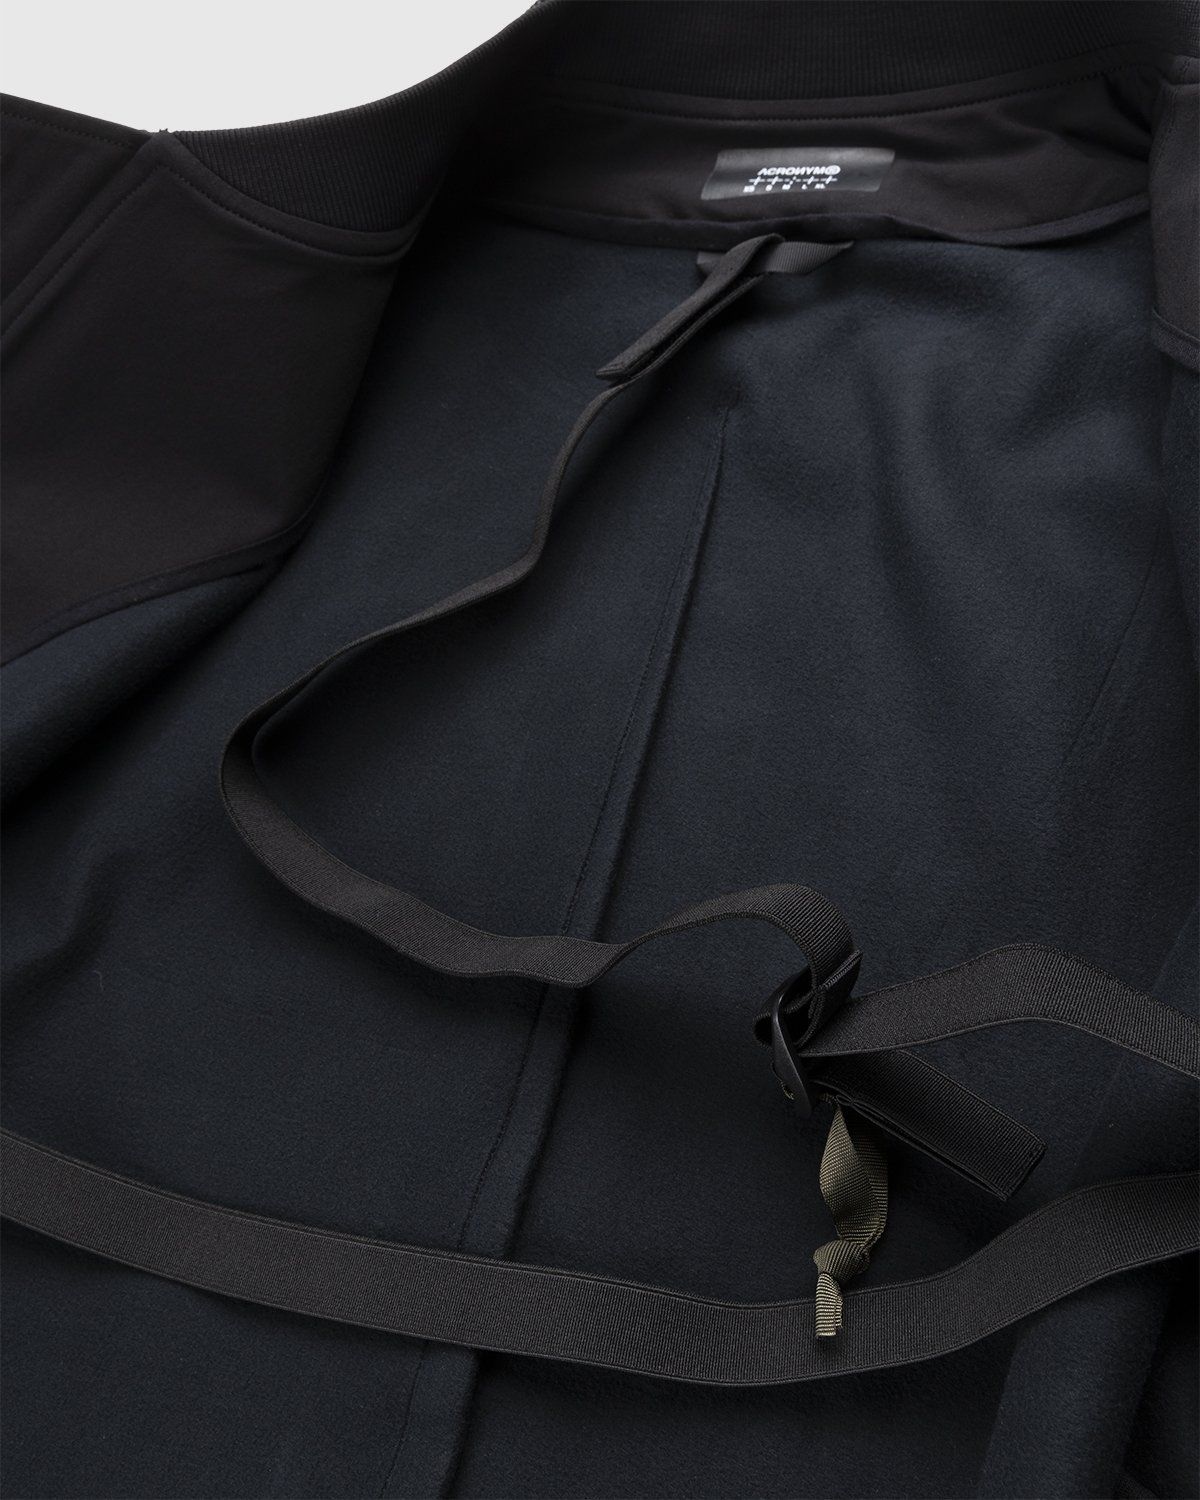 ACRONYM – J90-SS Jacket Black | Highsnobiety Shop